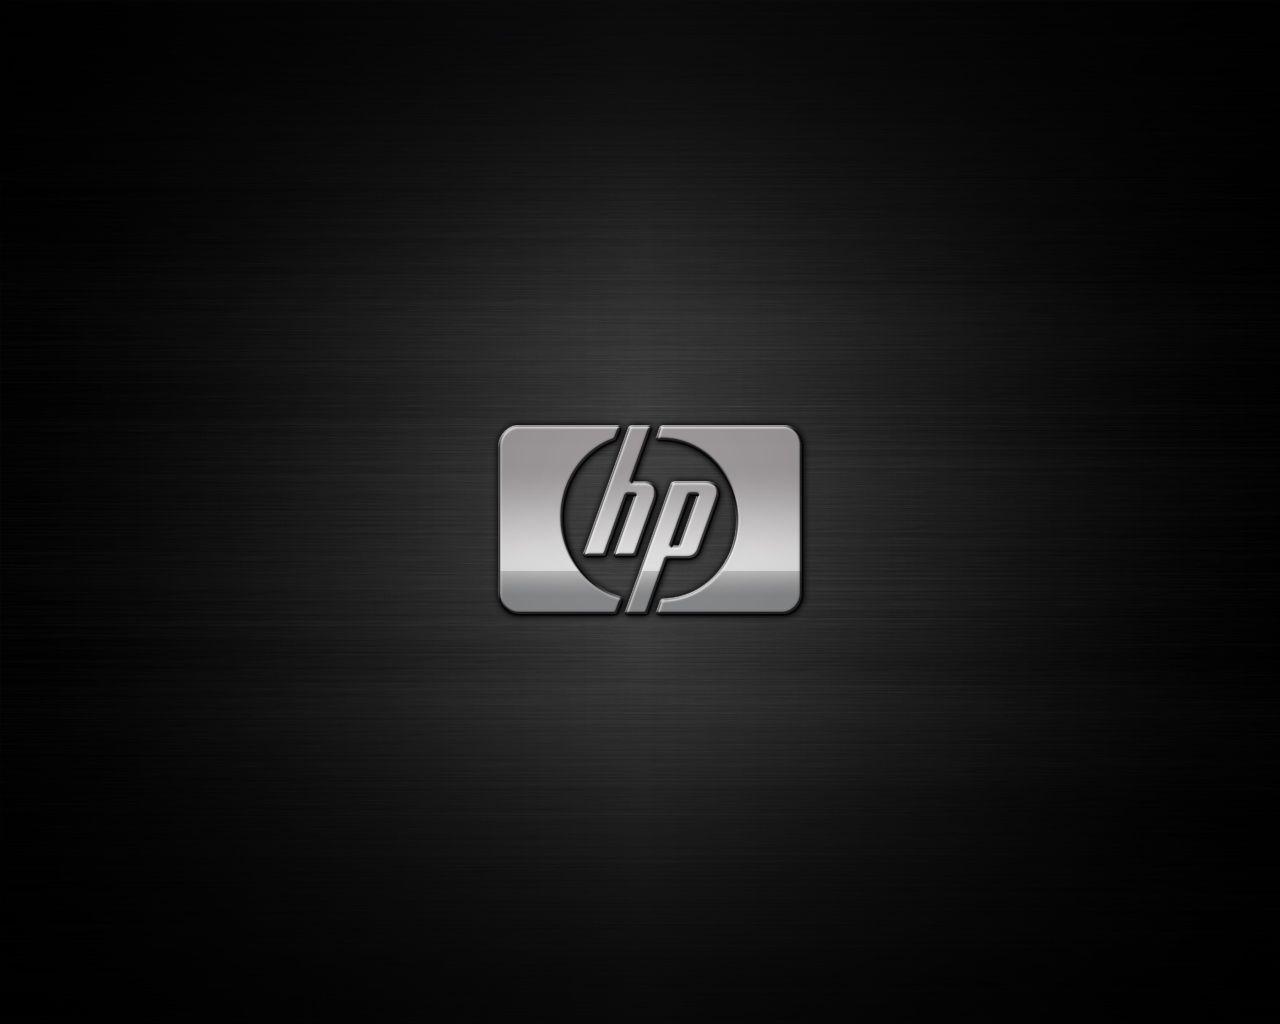 HP Wallpaper Iphone